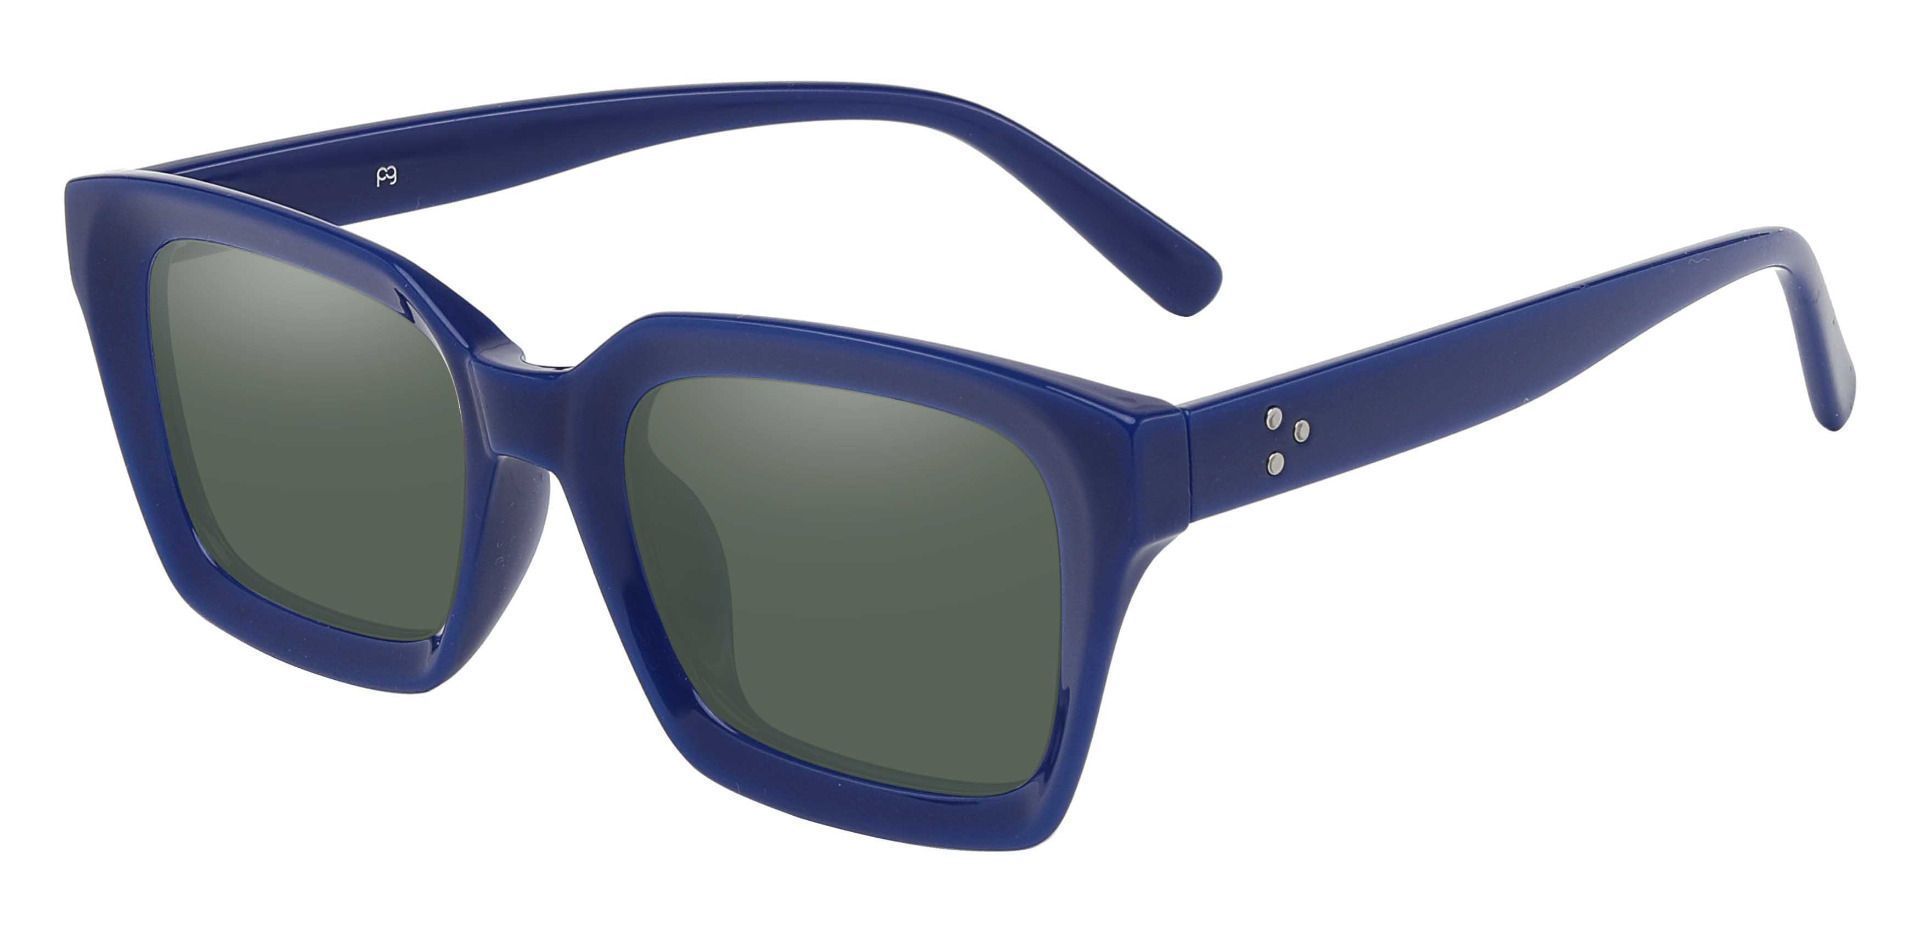 Unity Rectangle Prescription Sunglasses - Blue Frame With Green Lenses